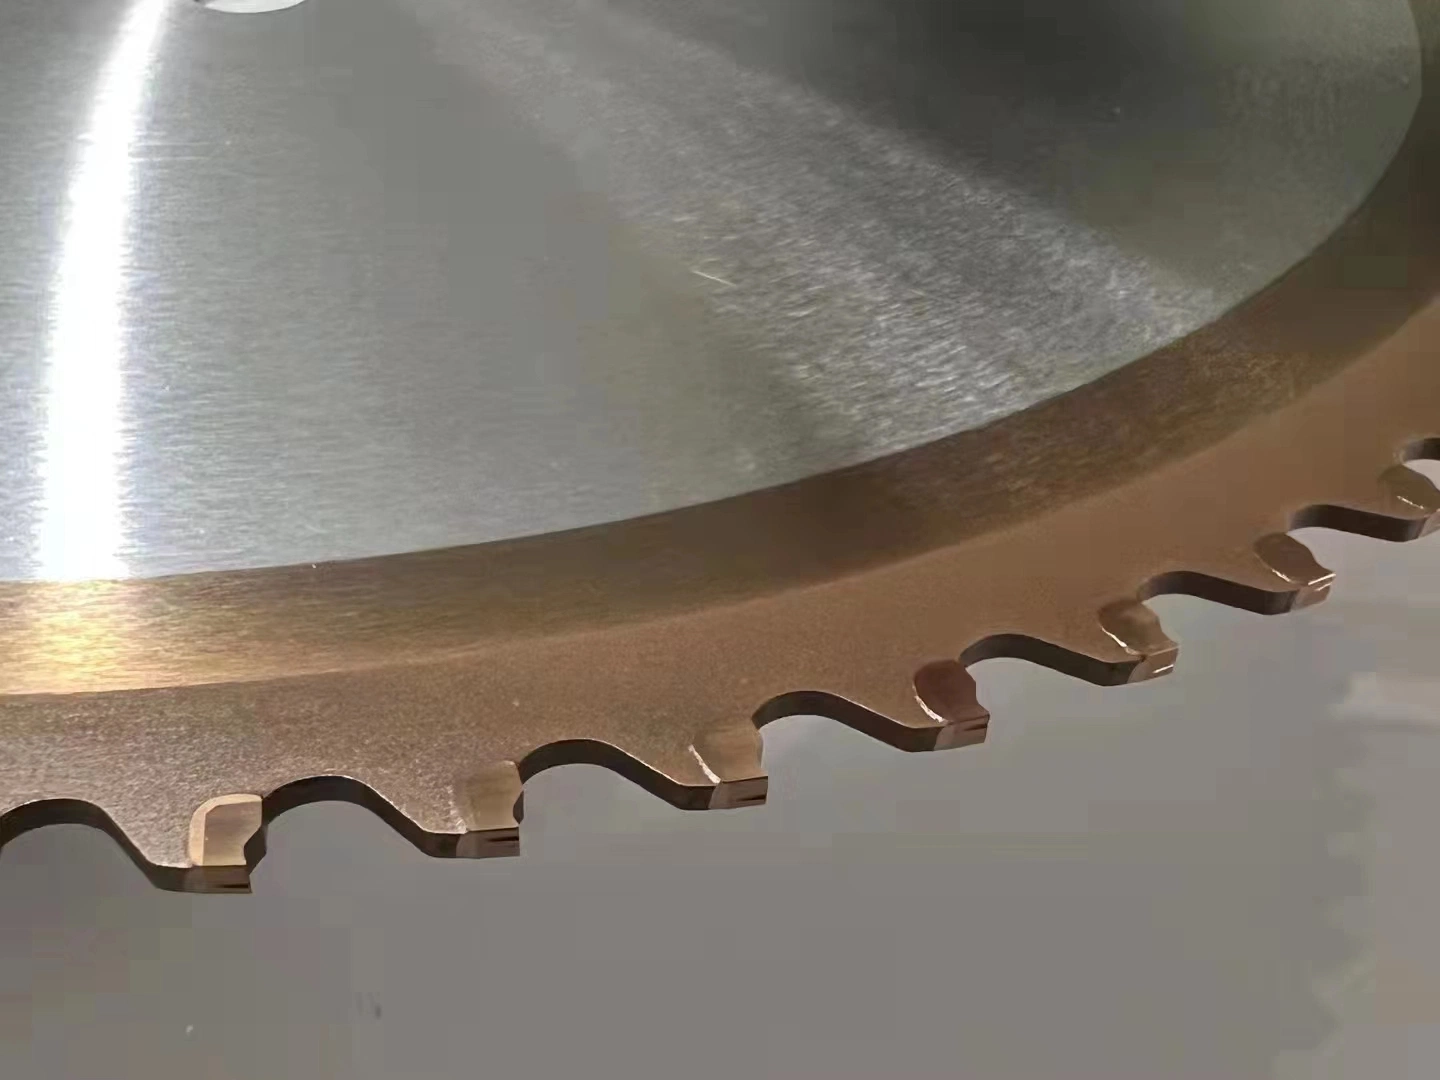 Circular Saw Machine Cutting Saw Blade Tools, High Precision Cutting Cermet Circular Saw Blade for Metalsworking